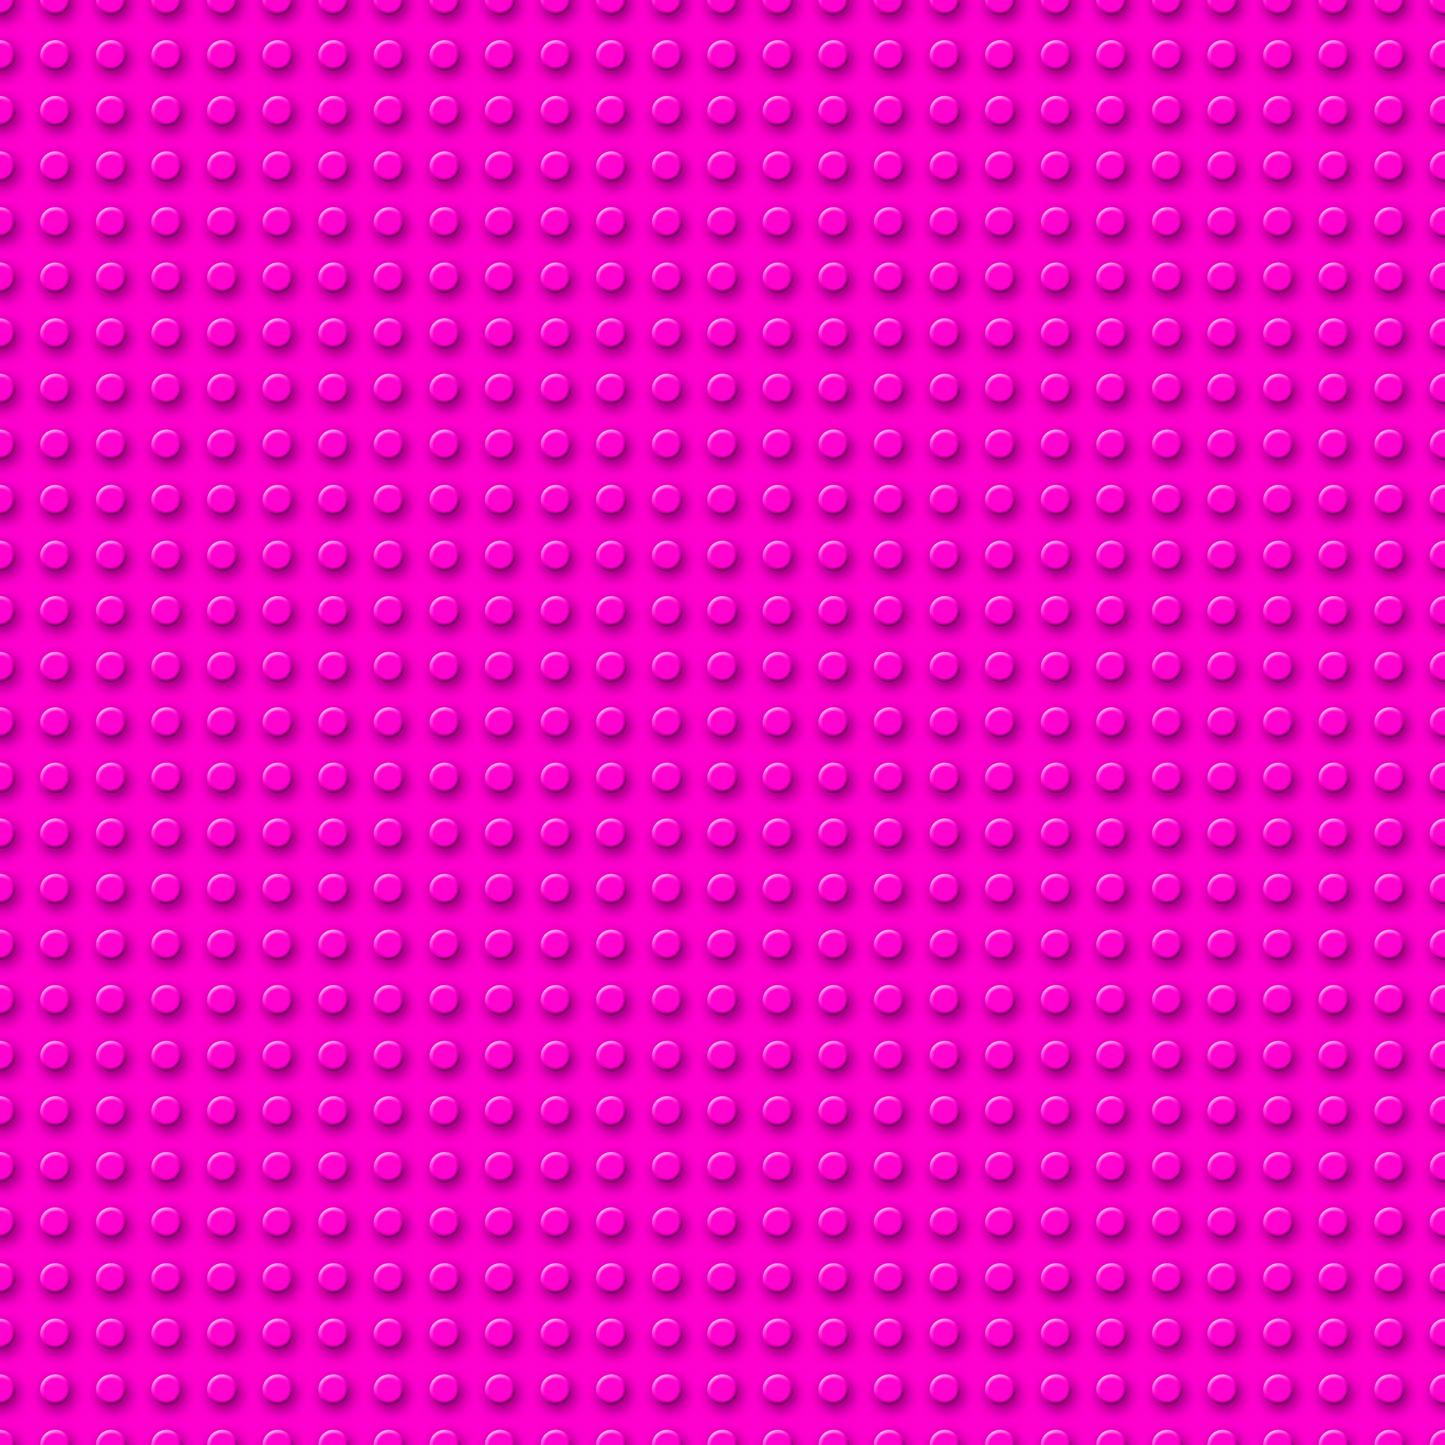 Building Blocks - Bright Pink - 015